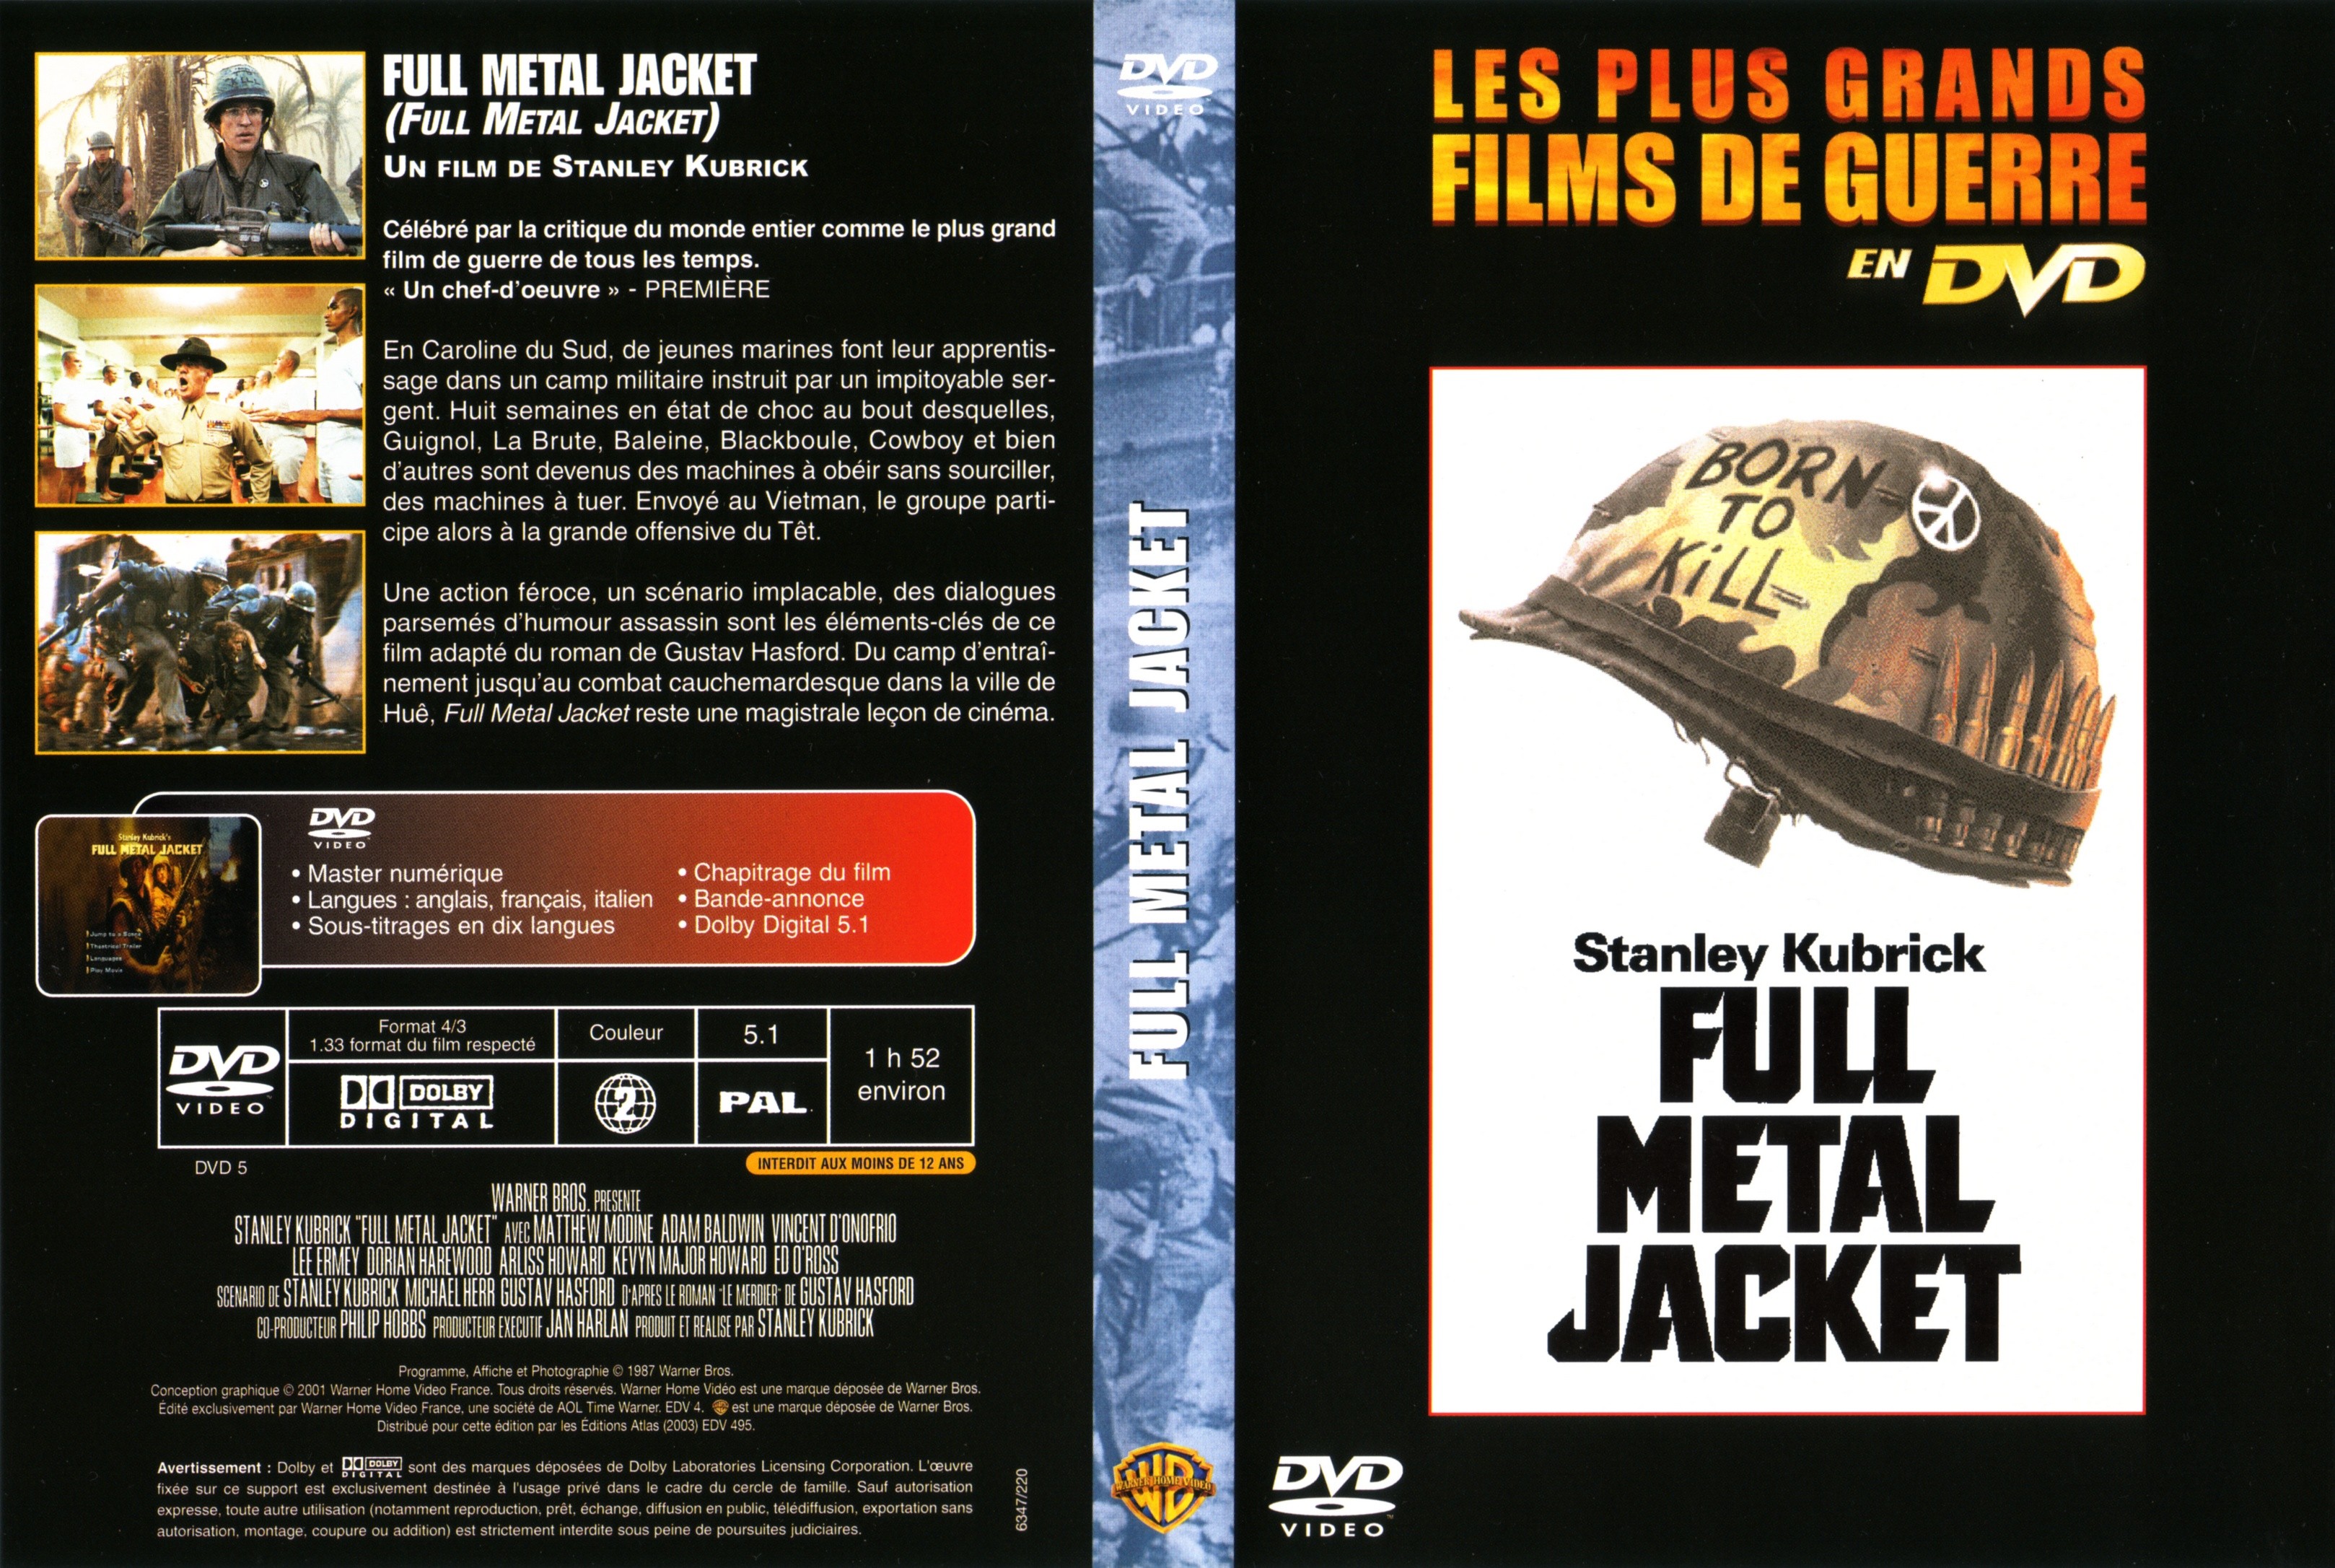 Jaquette DVD Full metal jacket